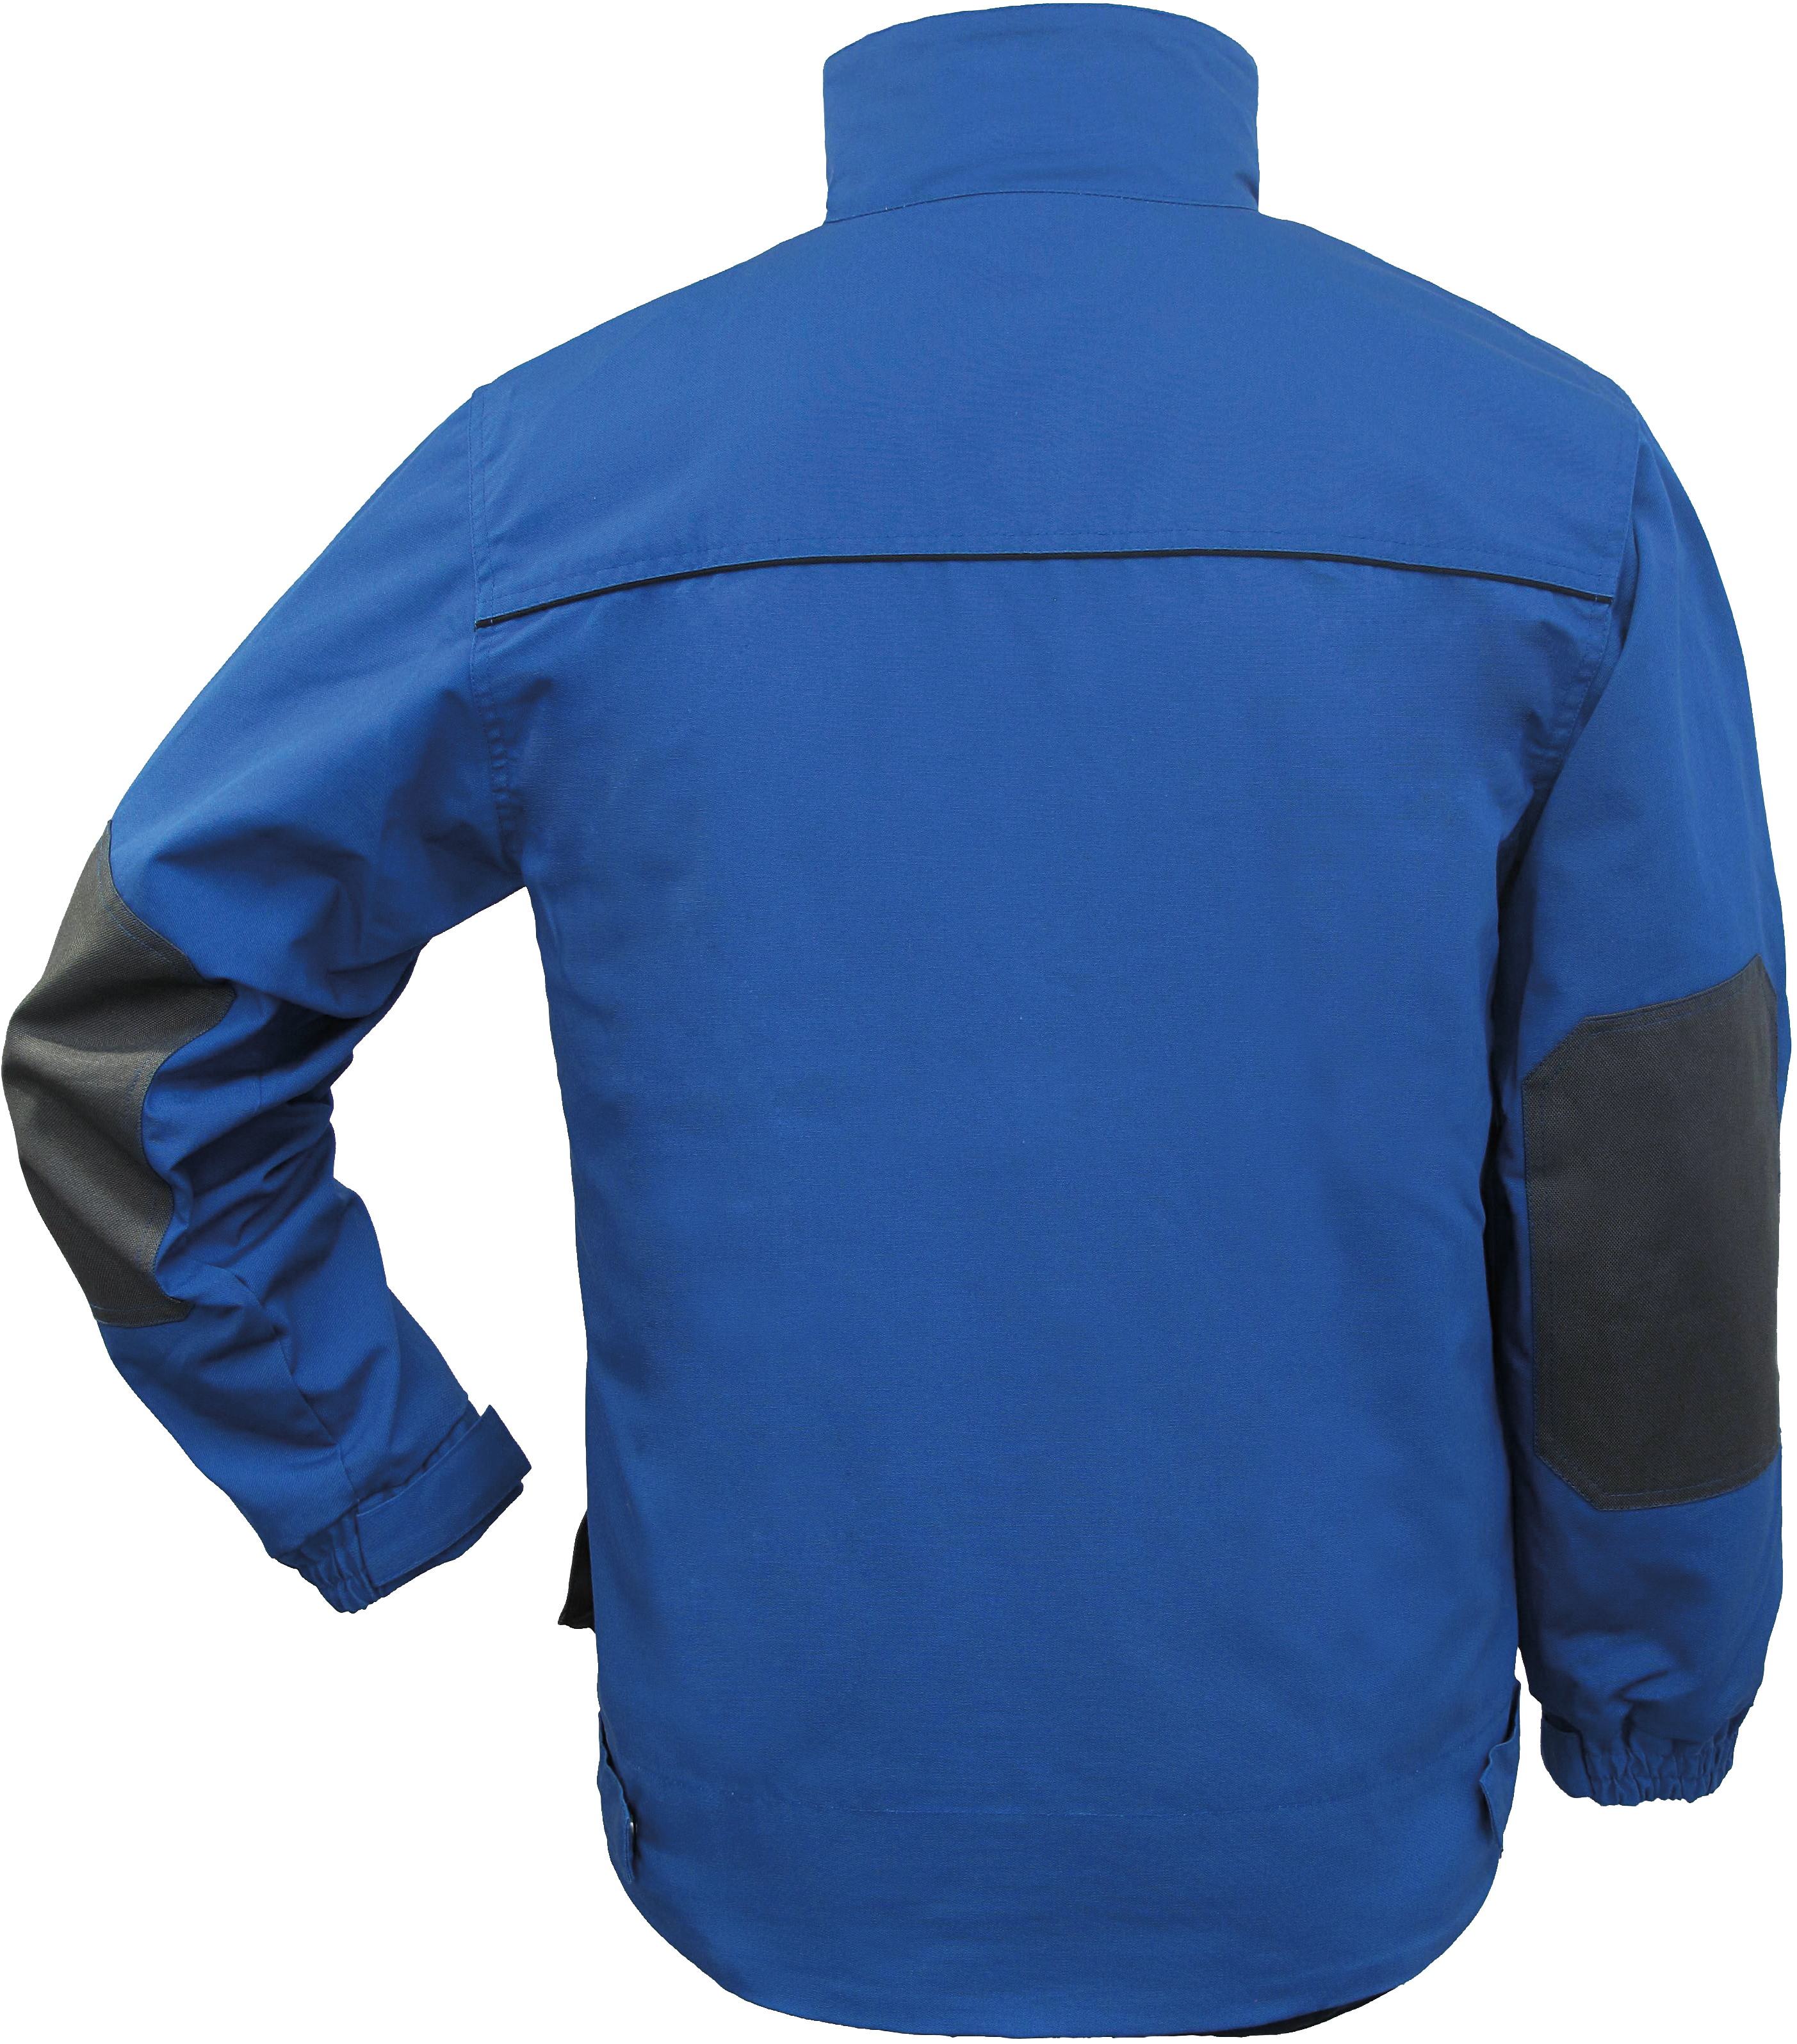 TRIUSO Jacke blau/grau Gr.M 270g 65% Polyester / 35% BW